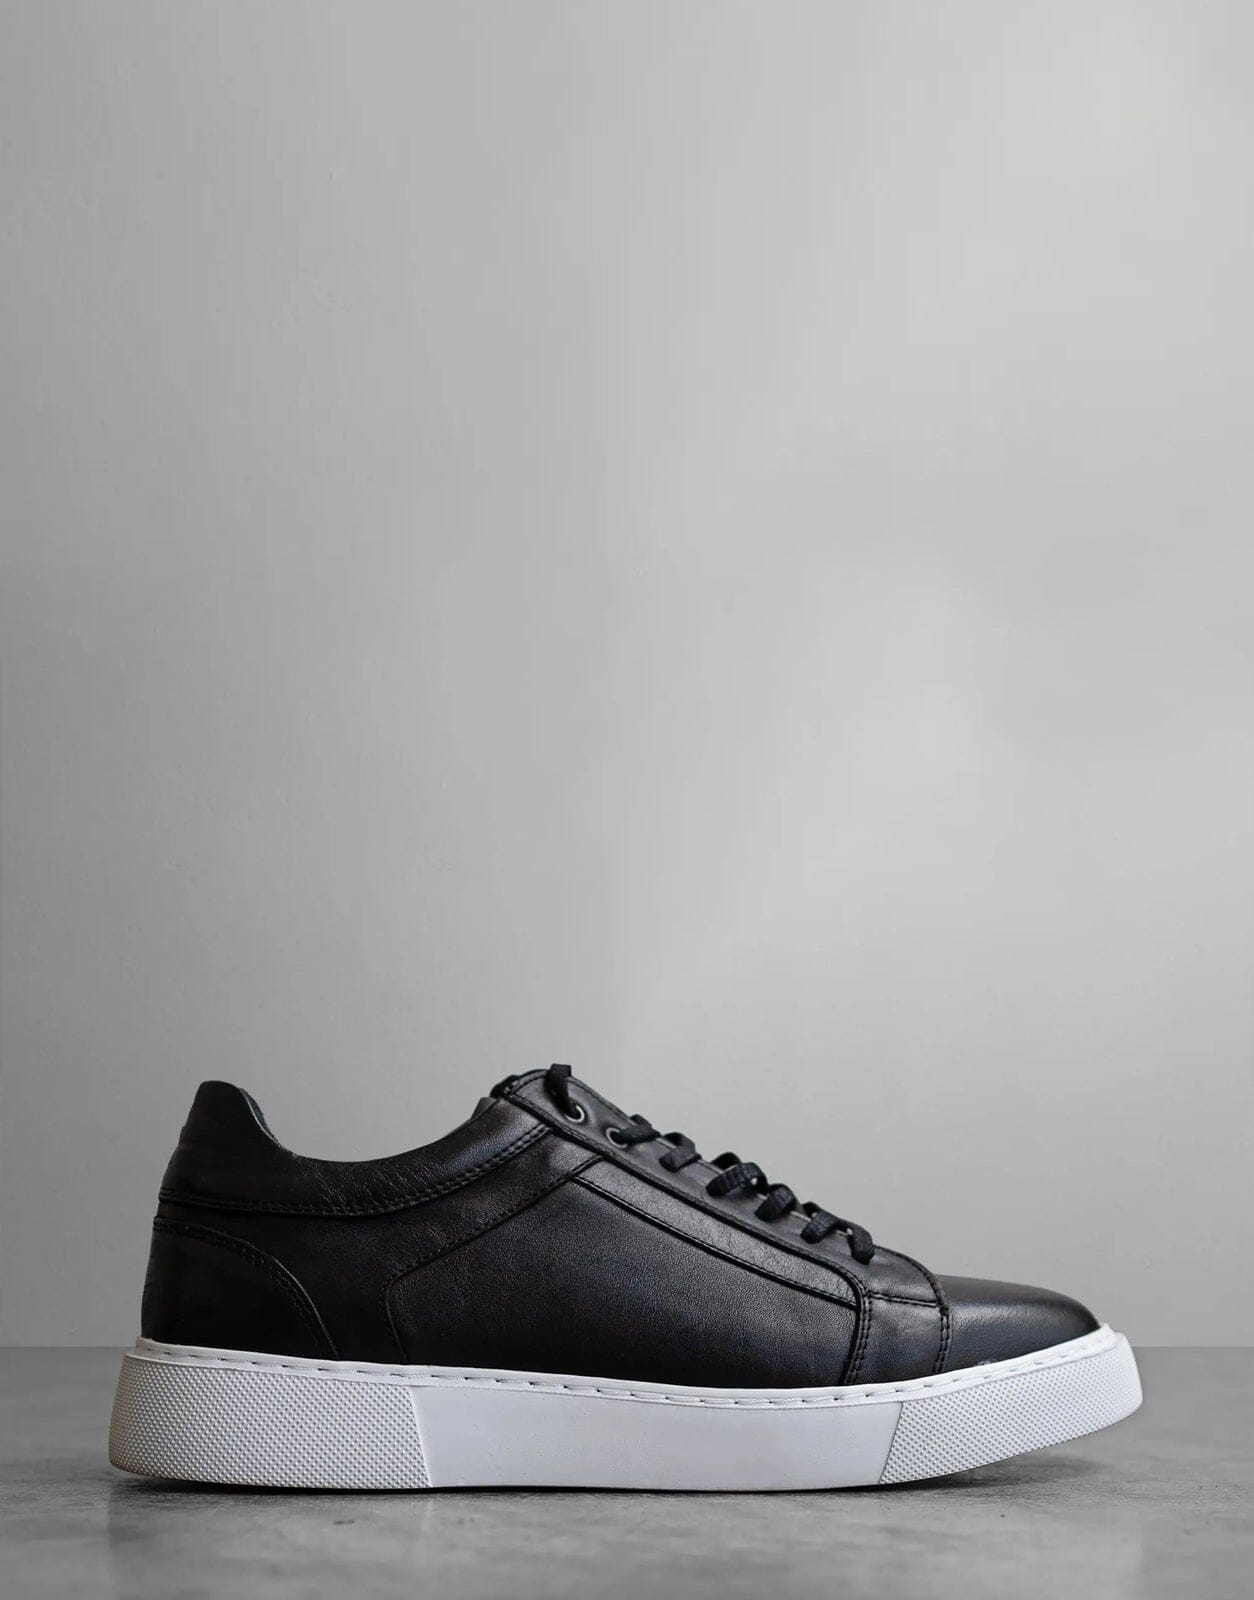 Fade Iconic Black/White Sneakers - Subwear